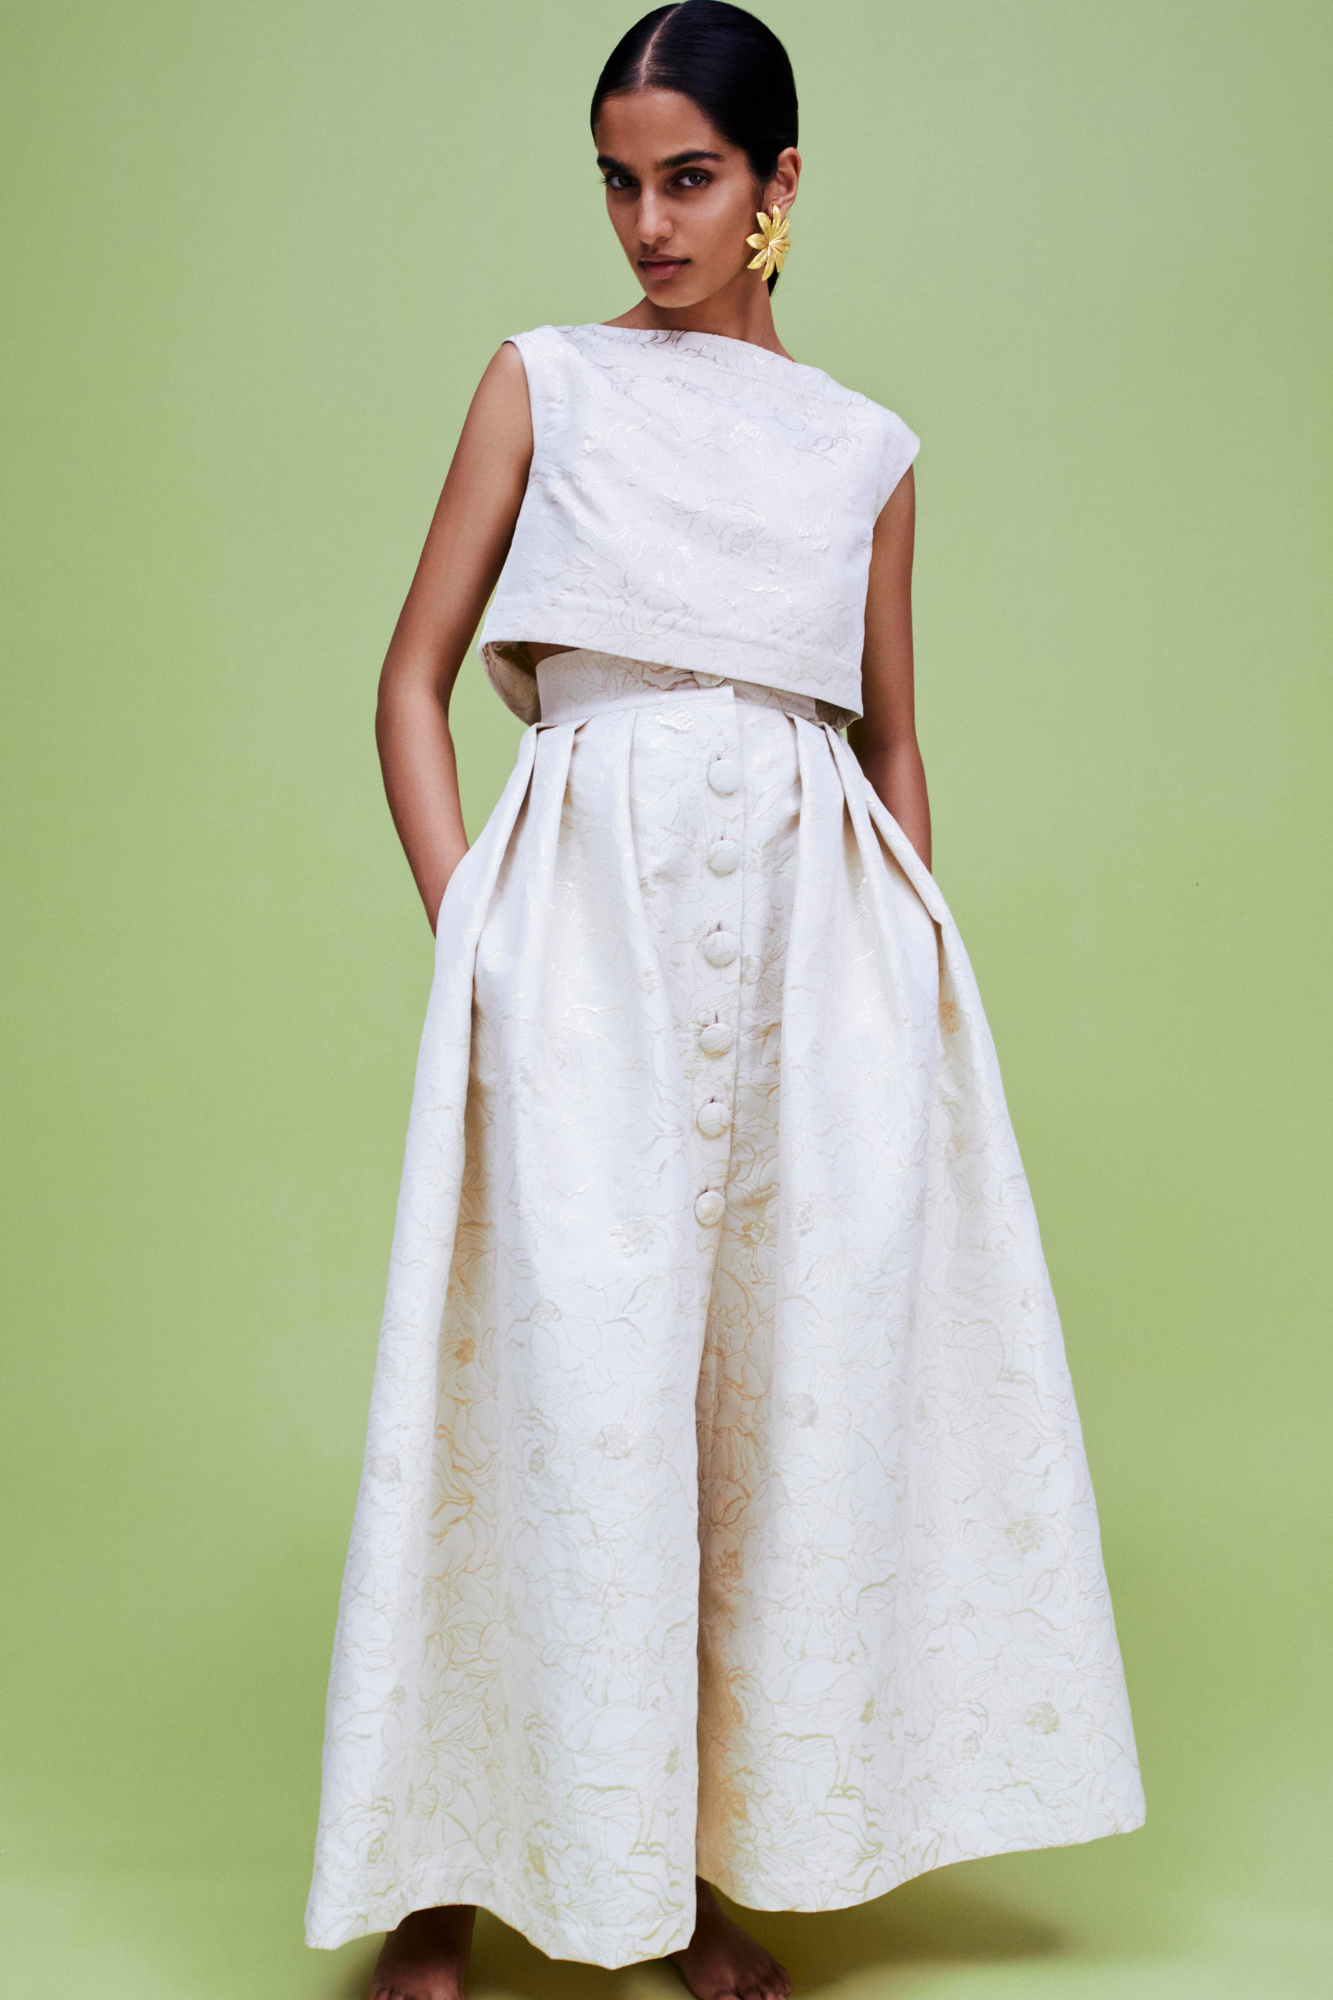 Rose Jacquard Ecru & Gold Maxi Skirt with Button Detail